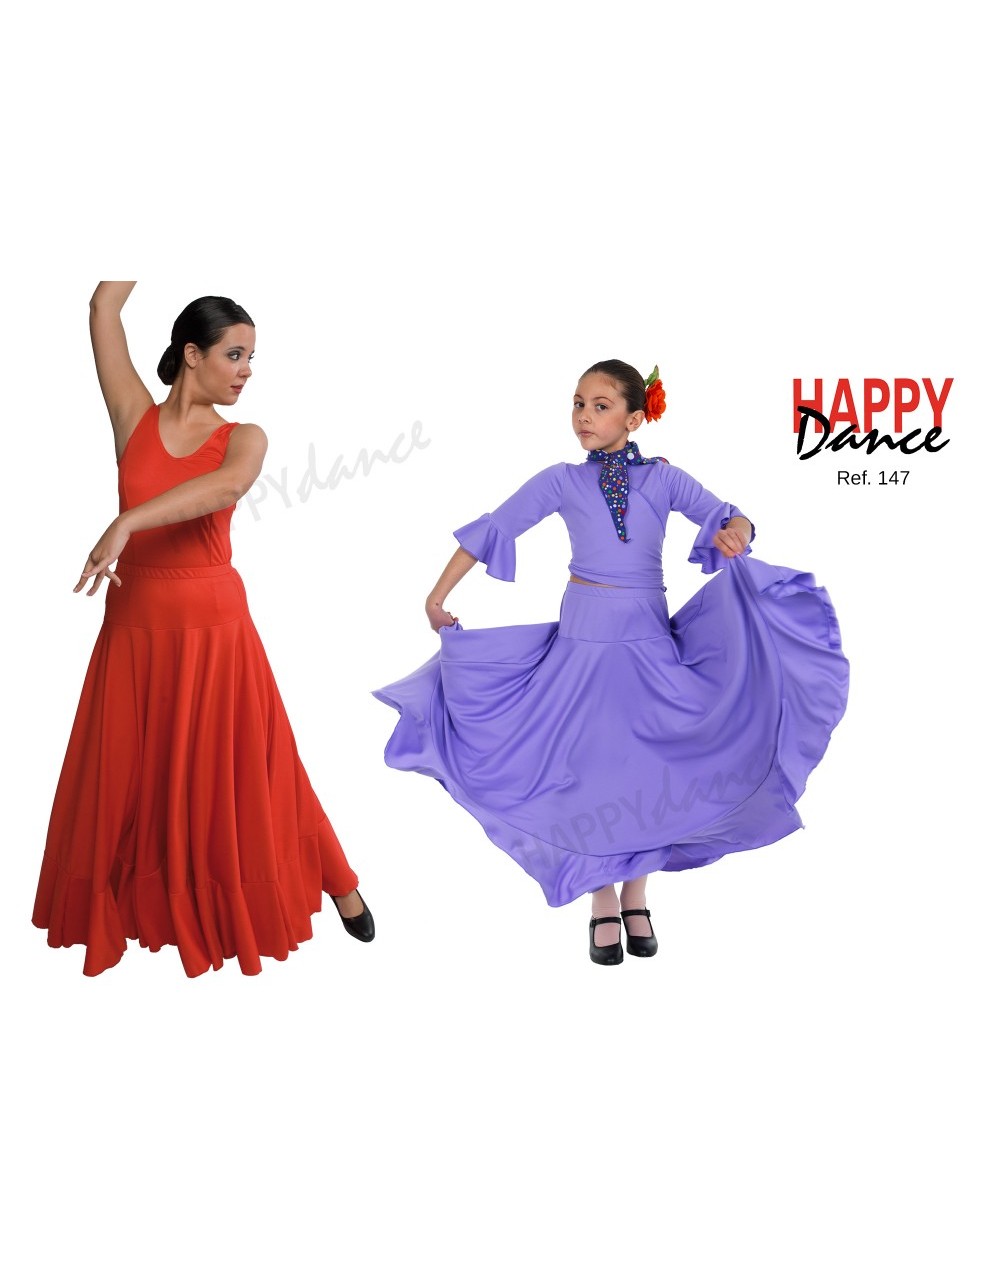 Falda Flamenco con volante, Ropa Flamenca Danza Española